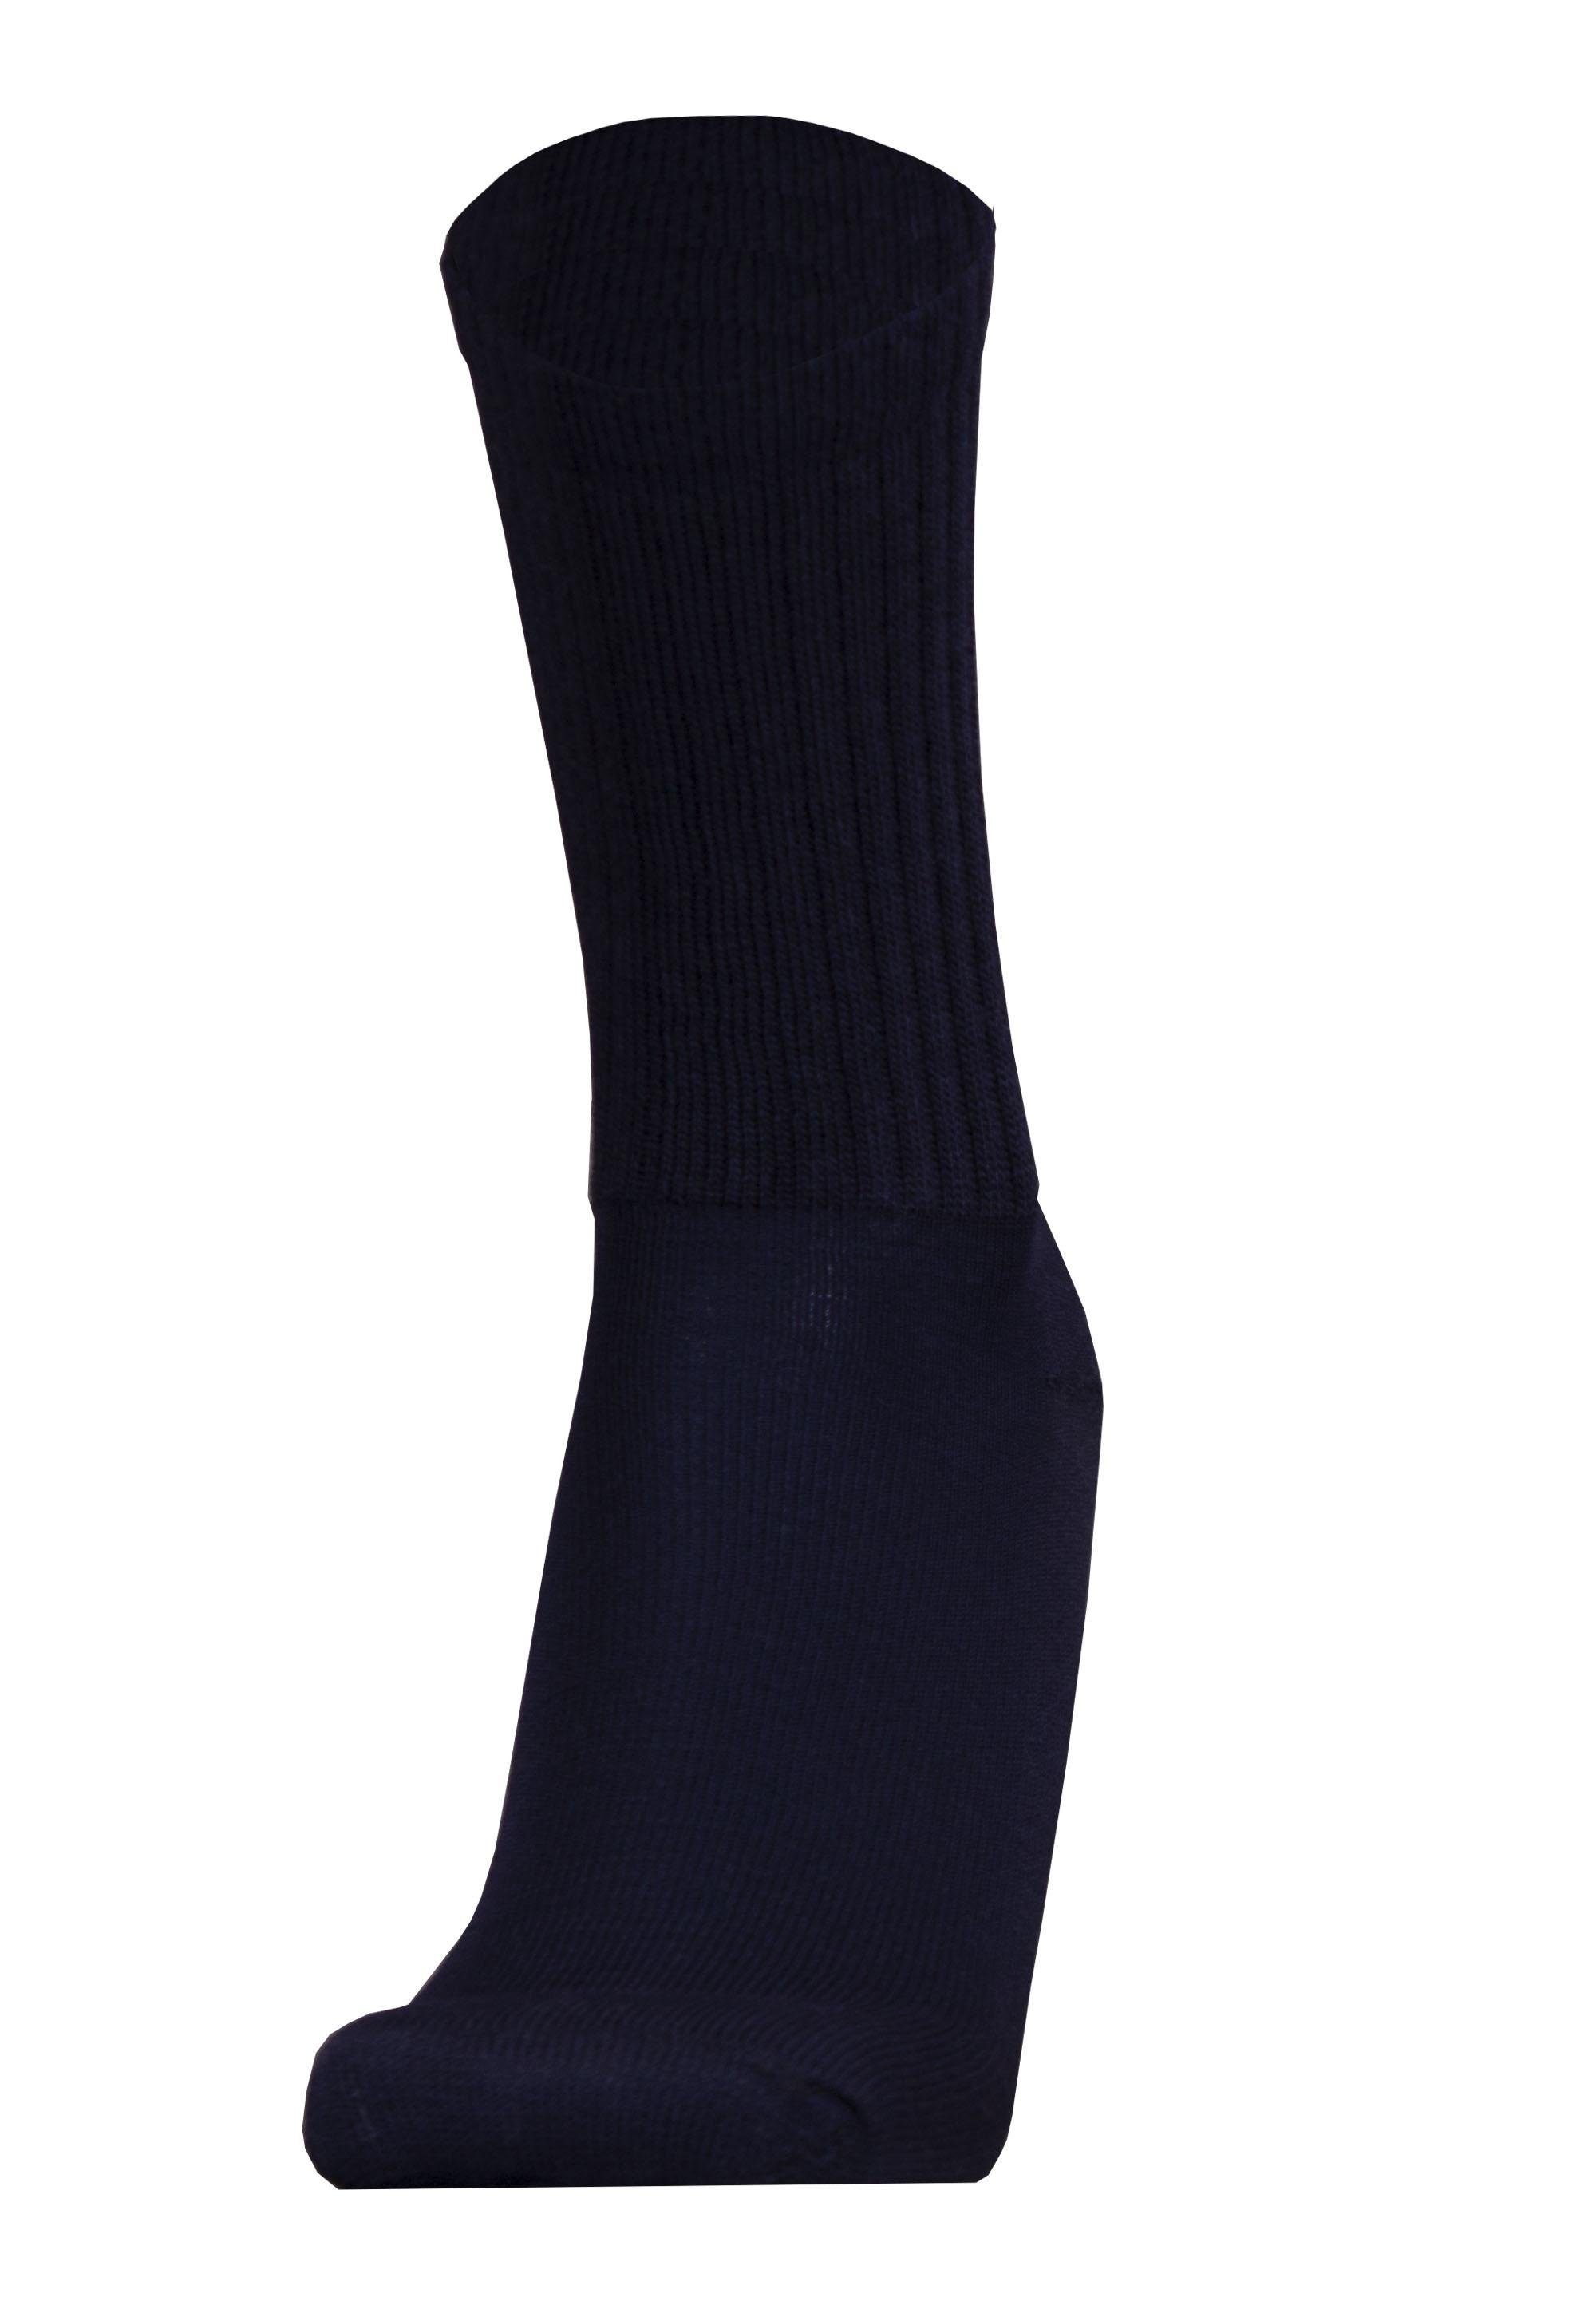 MERINO Merino-Wolle (1-Paar) mit Socken SPORT UphillSport